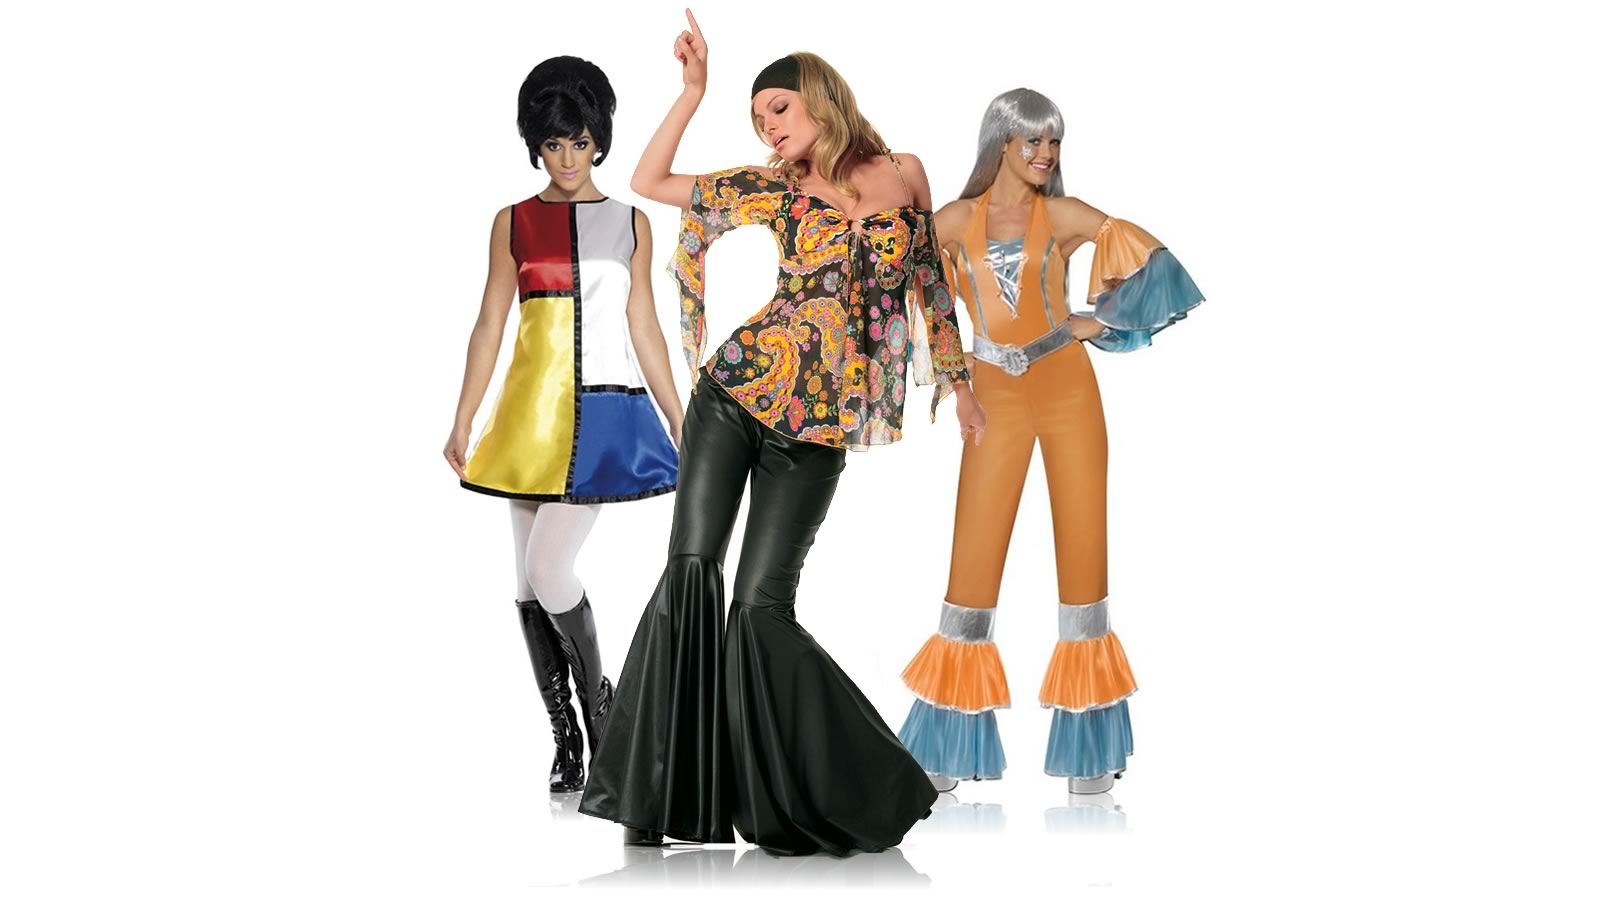 70s Disco Gold Fever Costume for Women